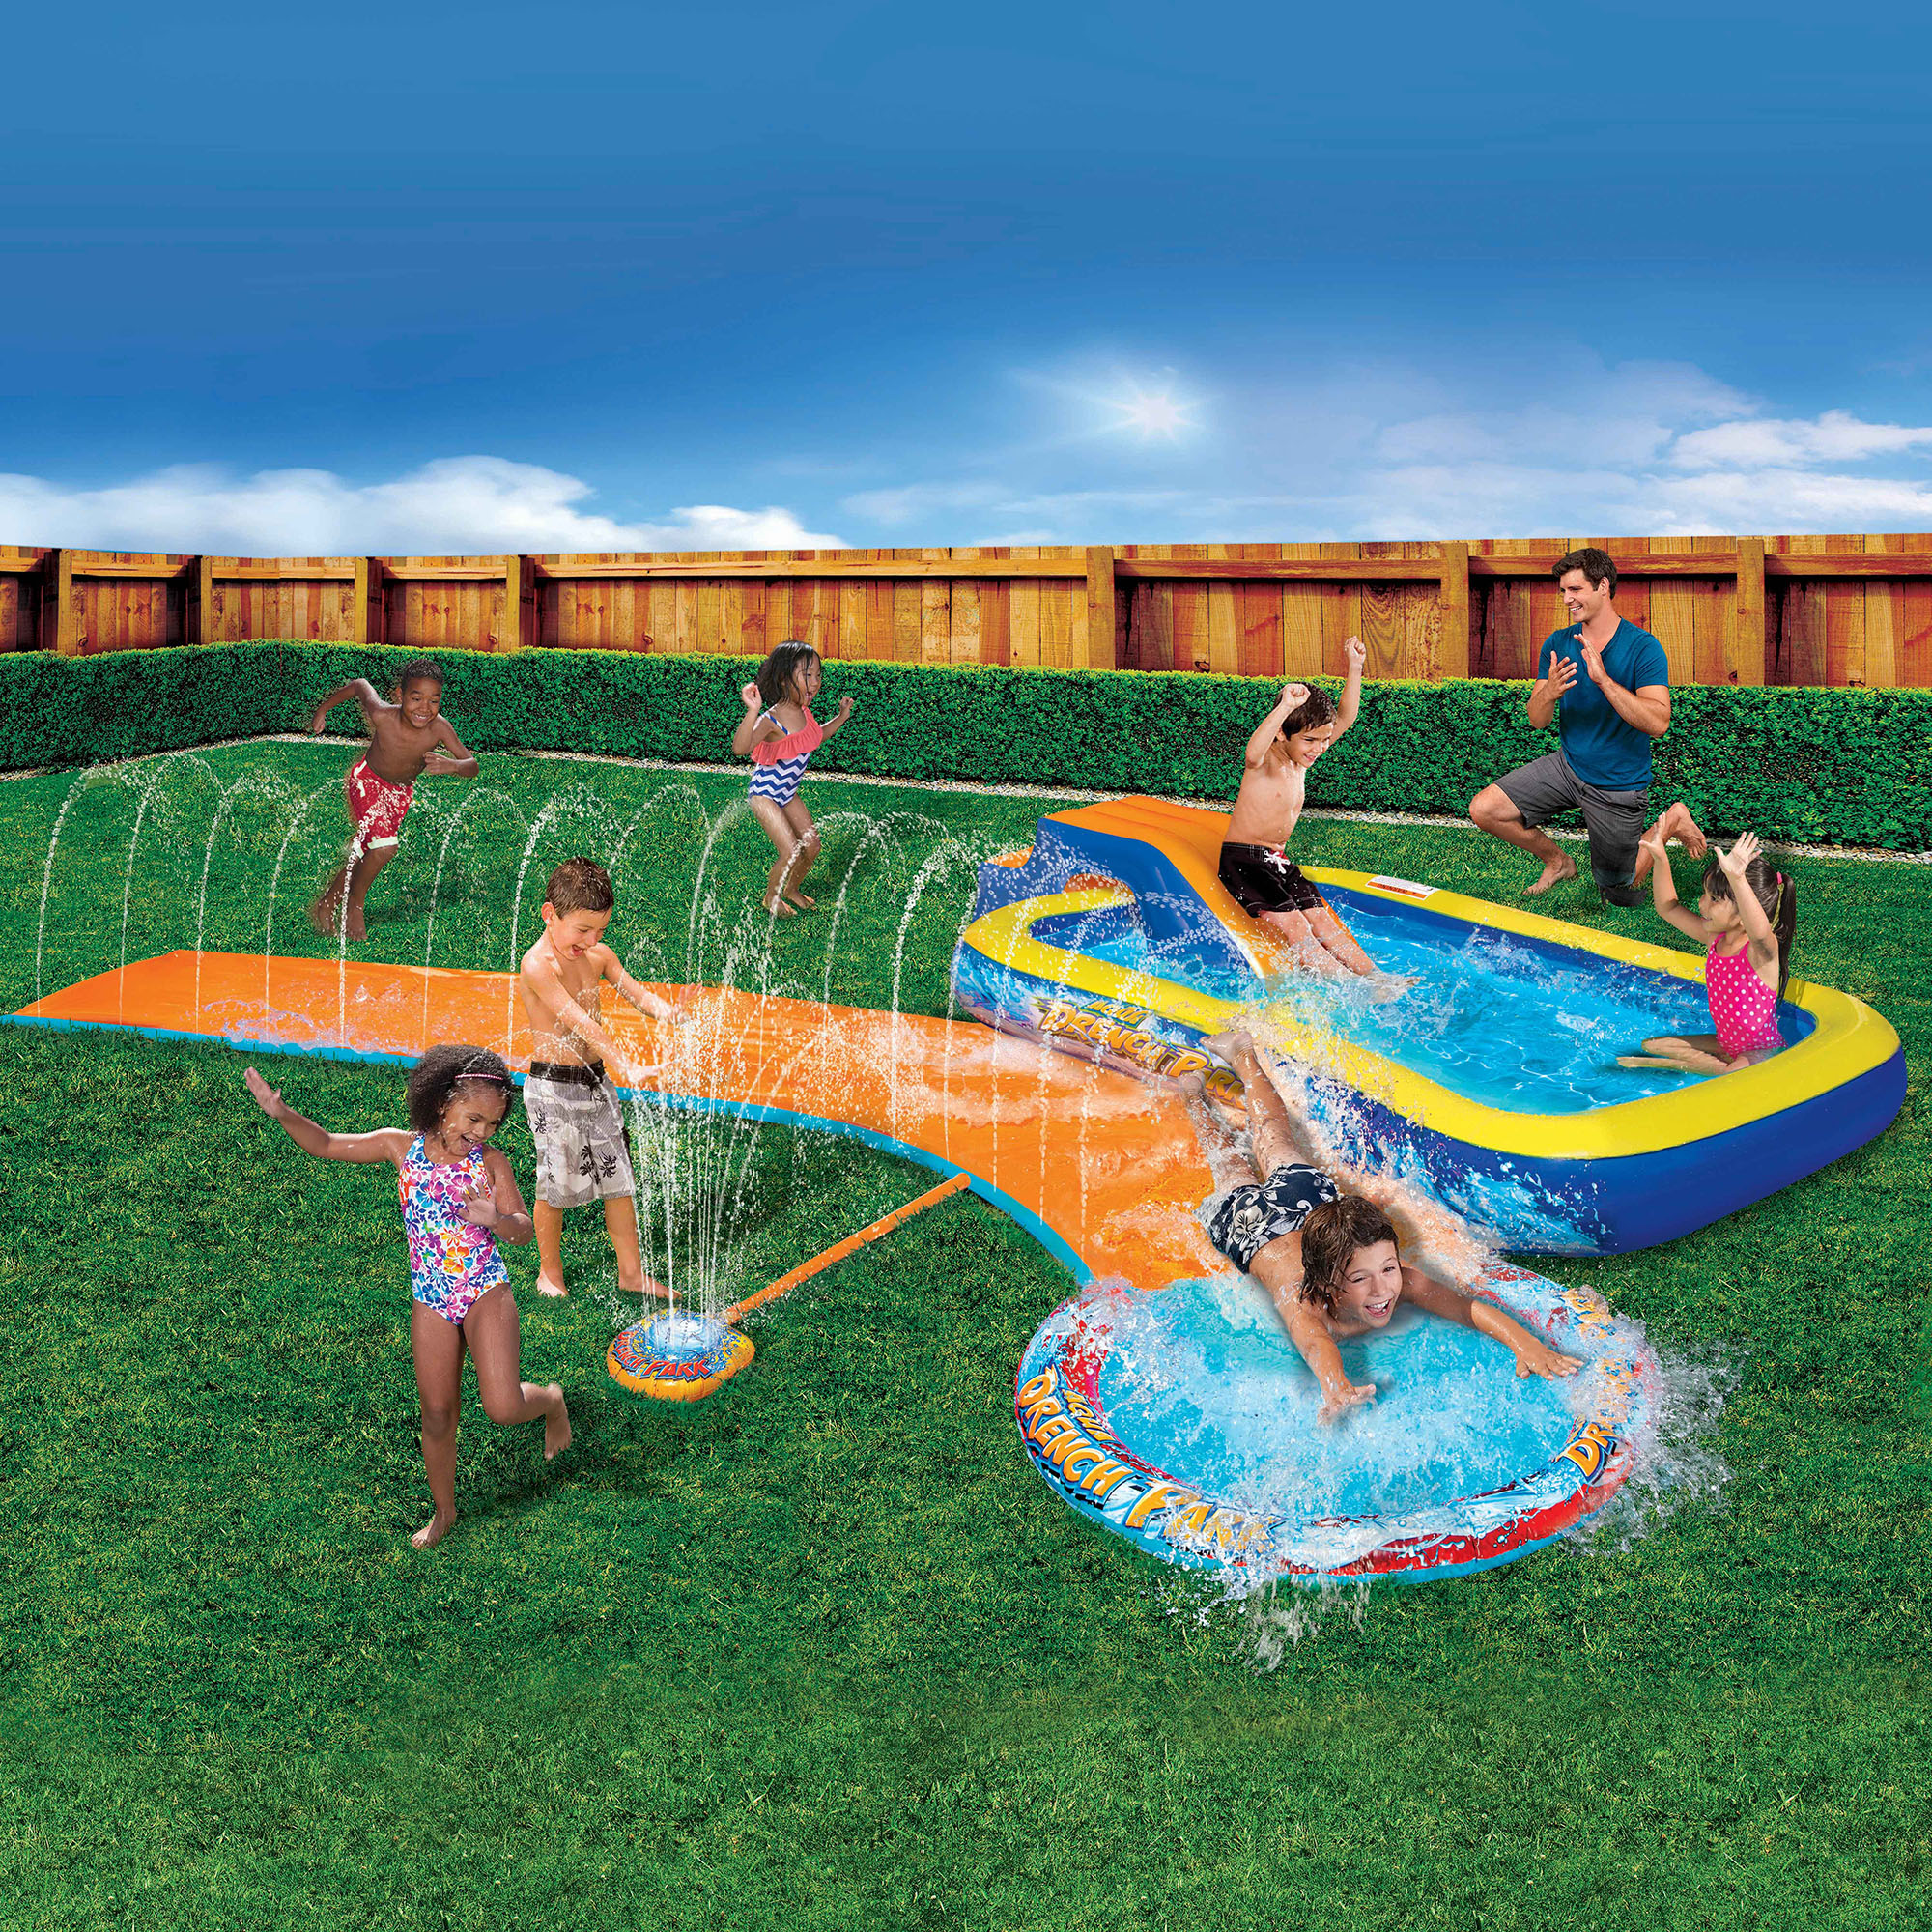 Banzai Aqua Drench 3-in-1 Splash Park w/ Pool, Sprinkler & Waterslide, Child Water Fun, Age 3-12 - image 4 of 12